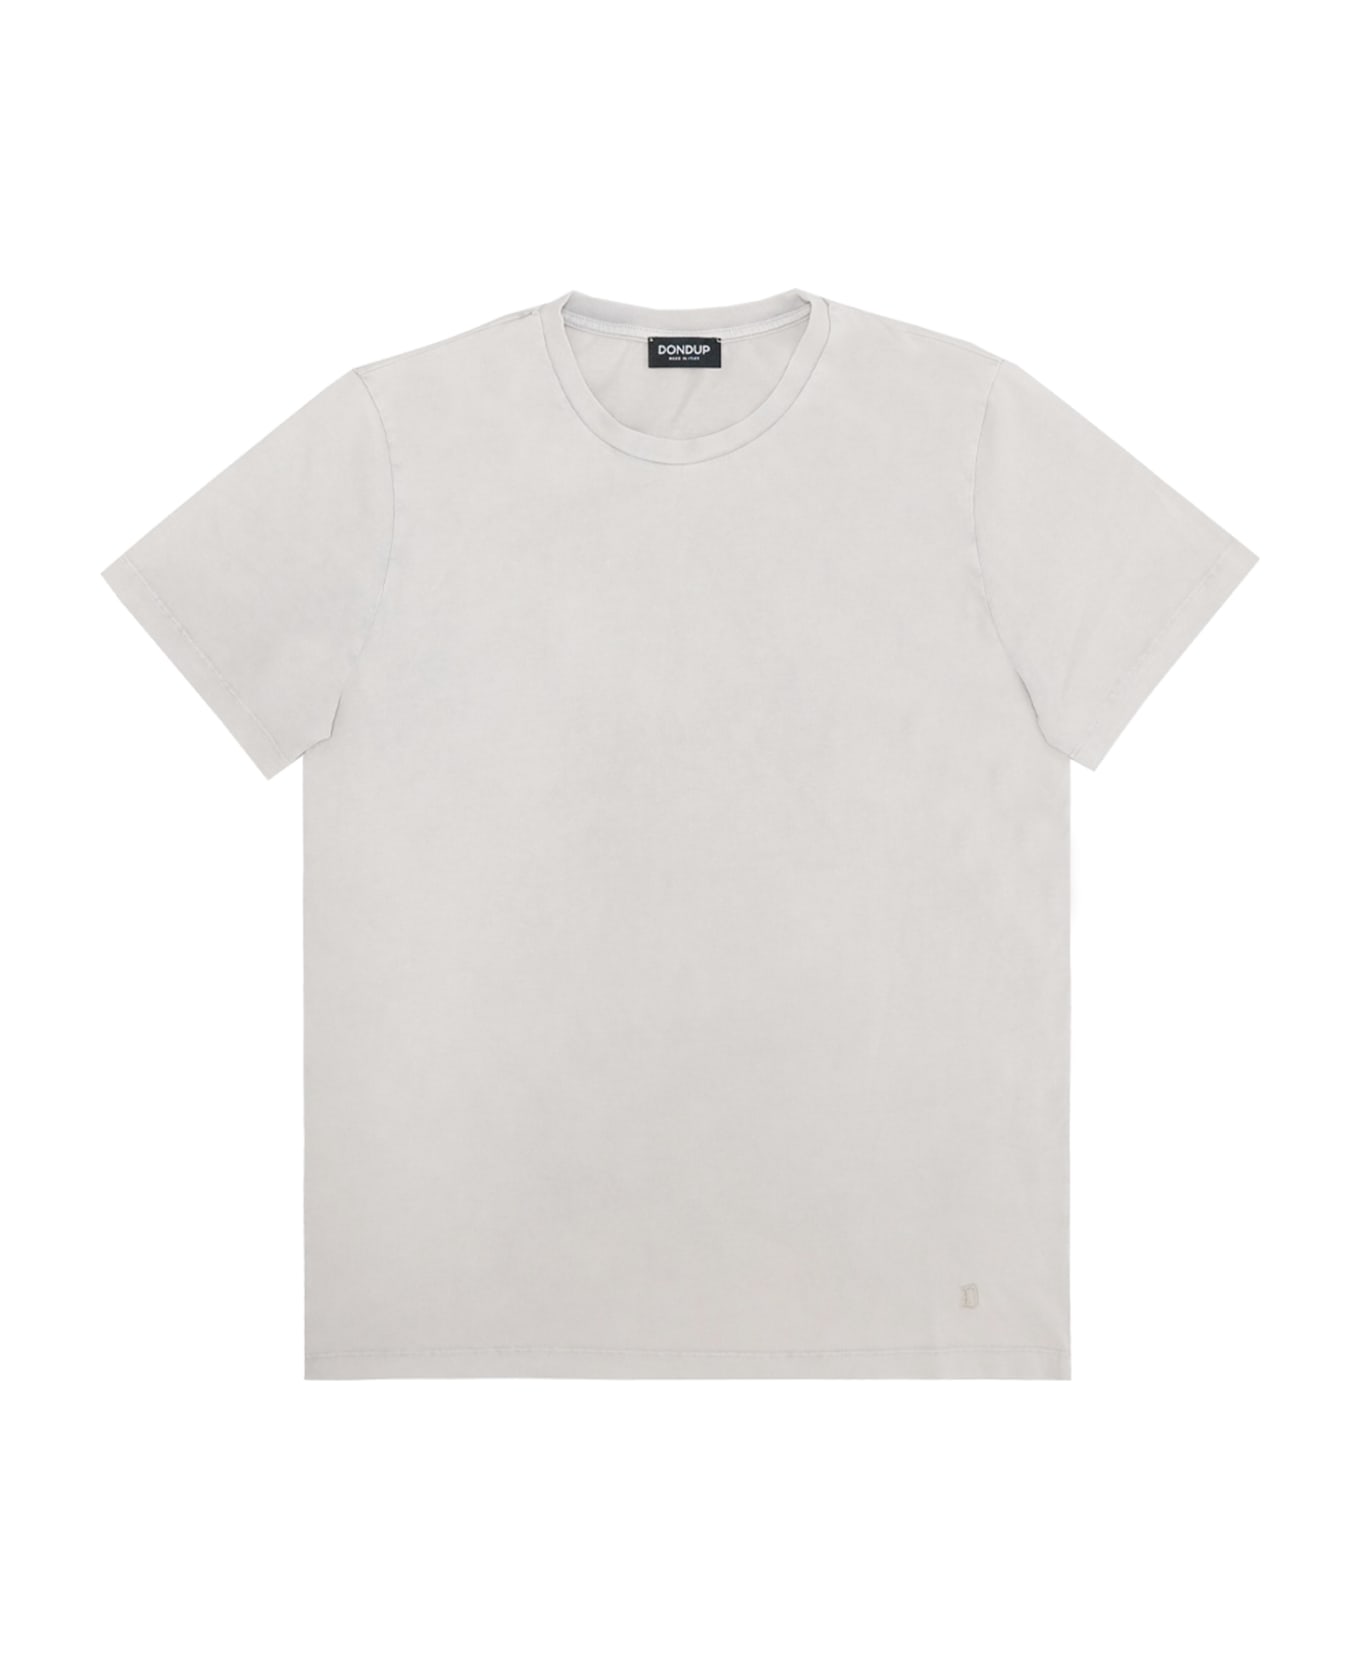 Dondup T-shirt - Grey